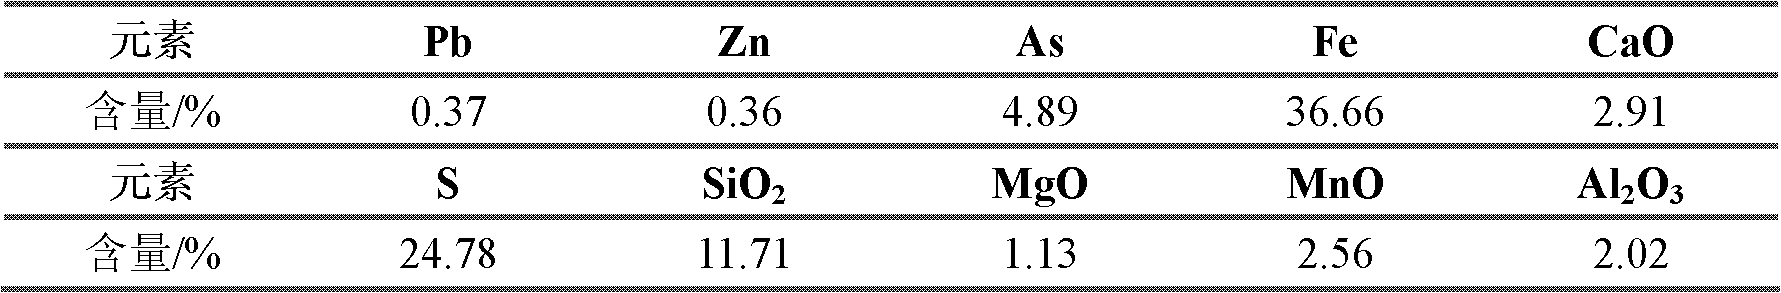 Floatation separation method for pyrites from arsenopyrites